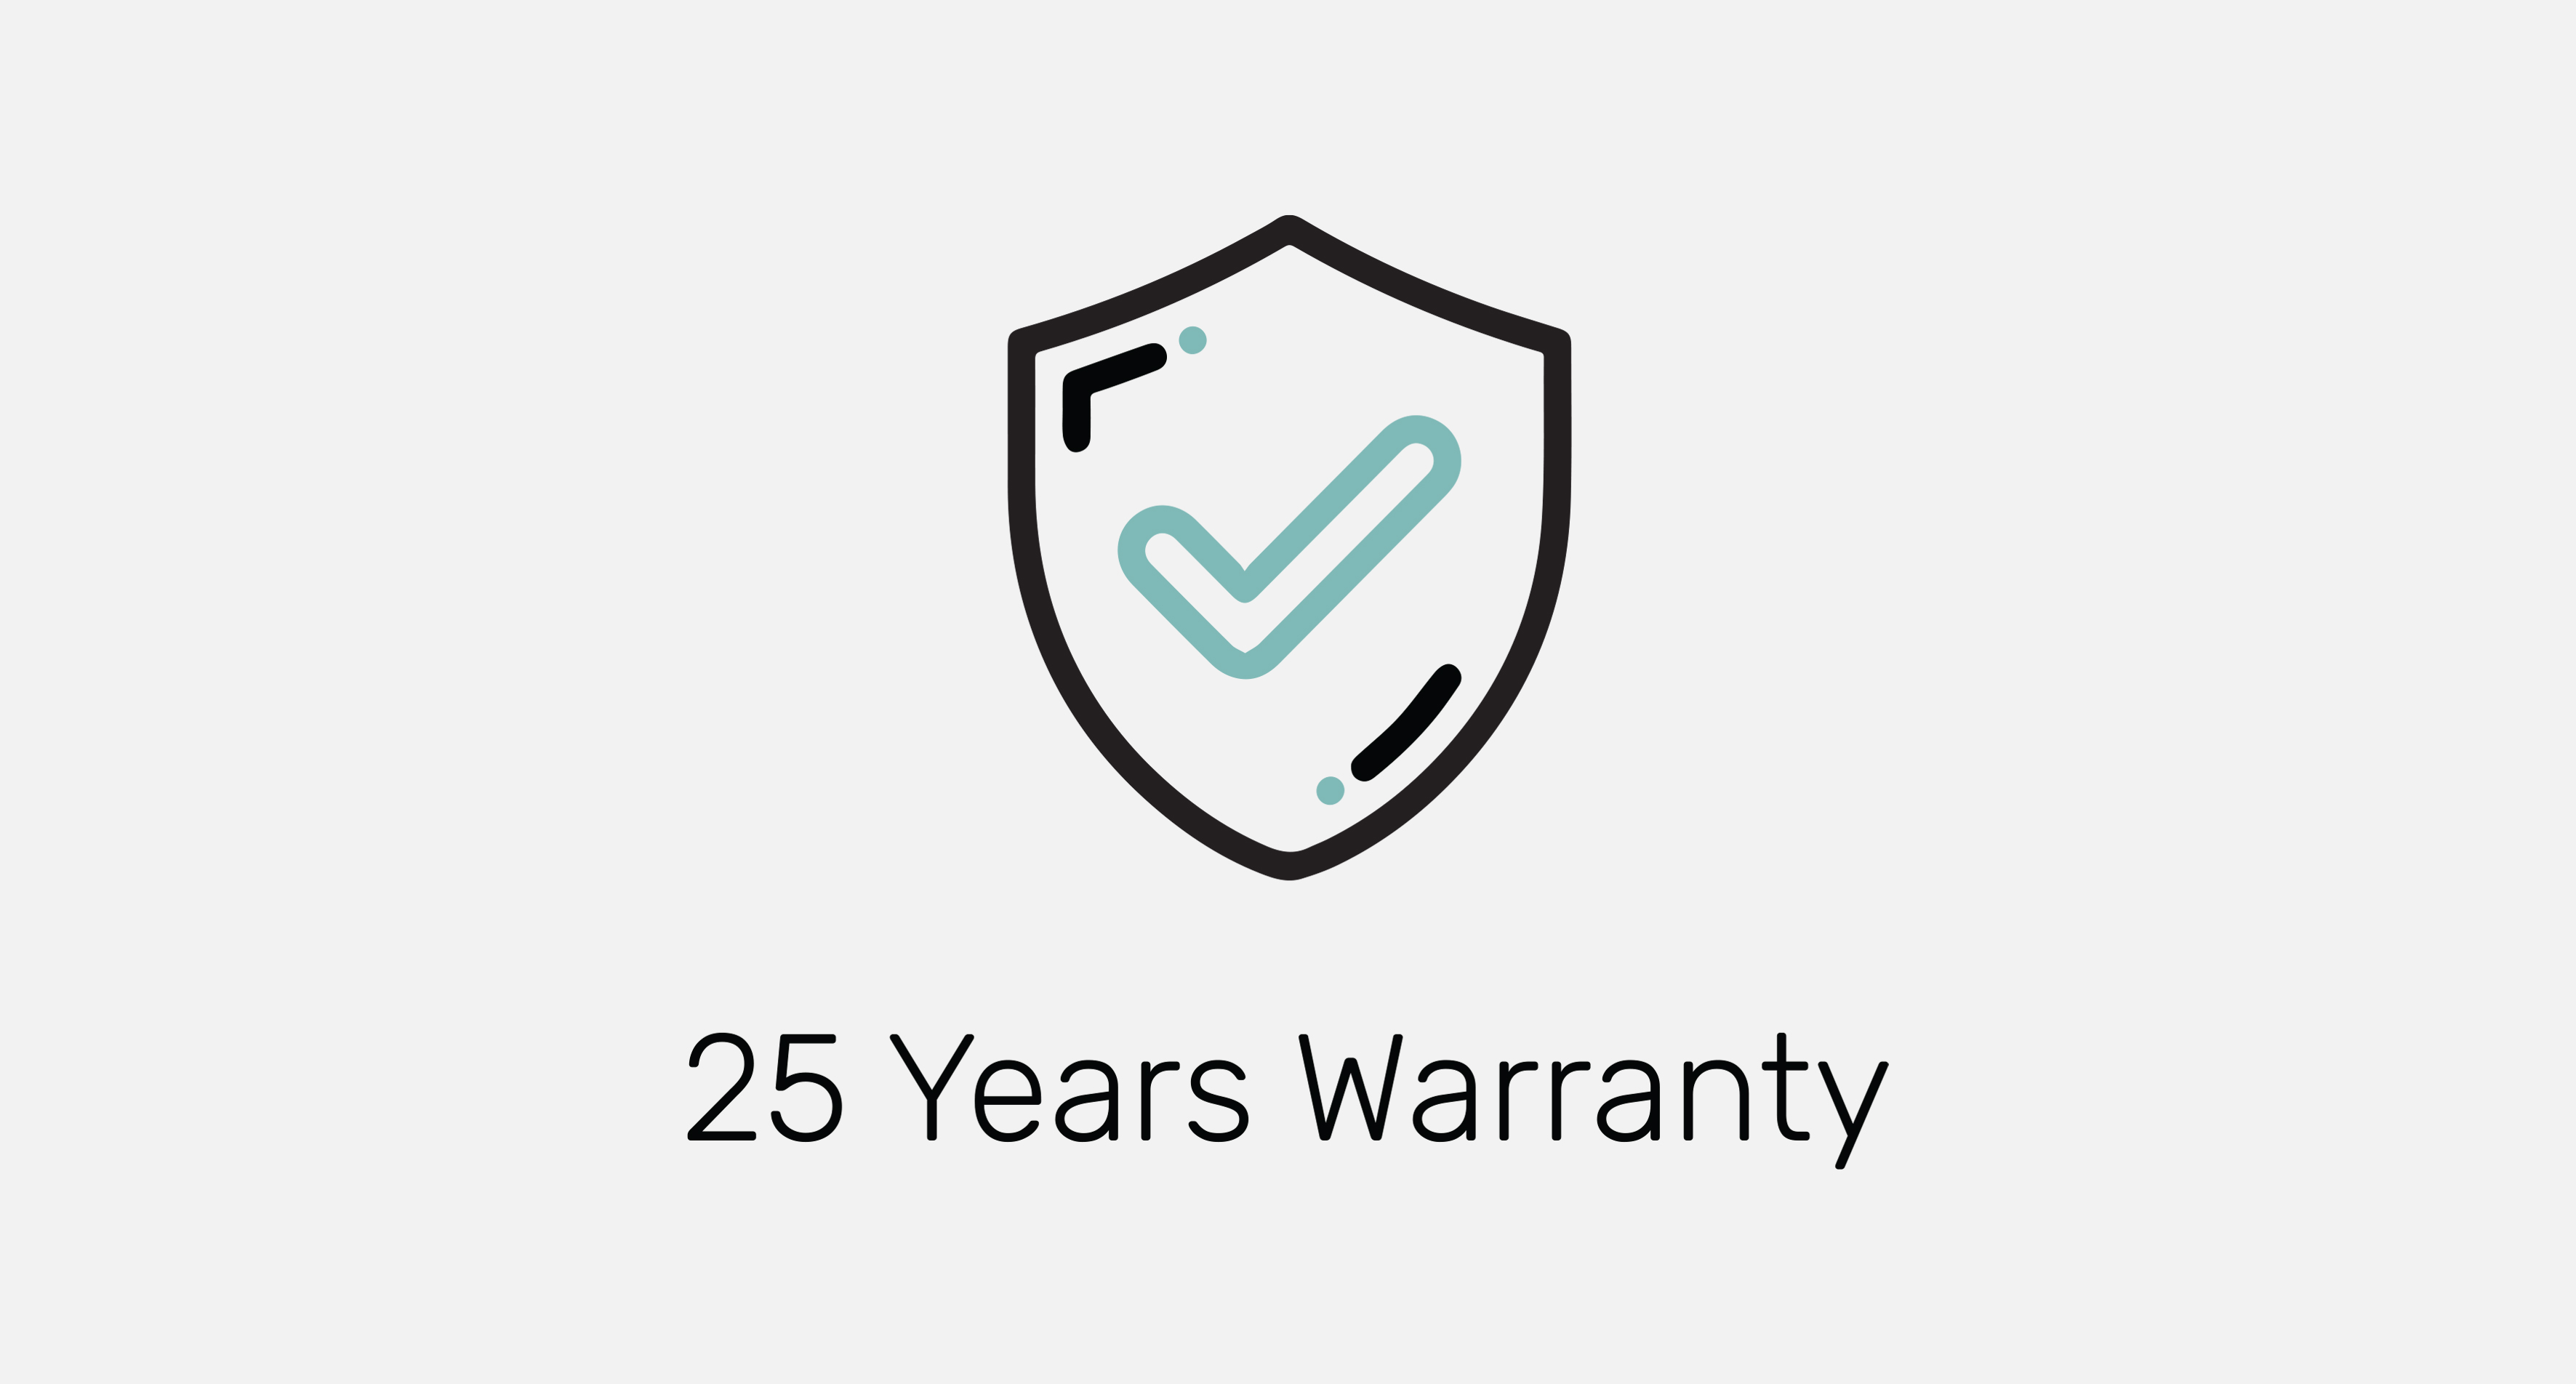 25 Year Warranty